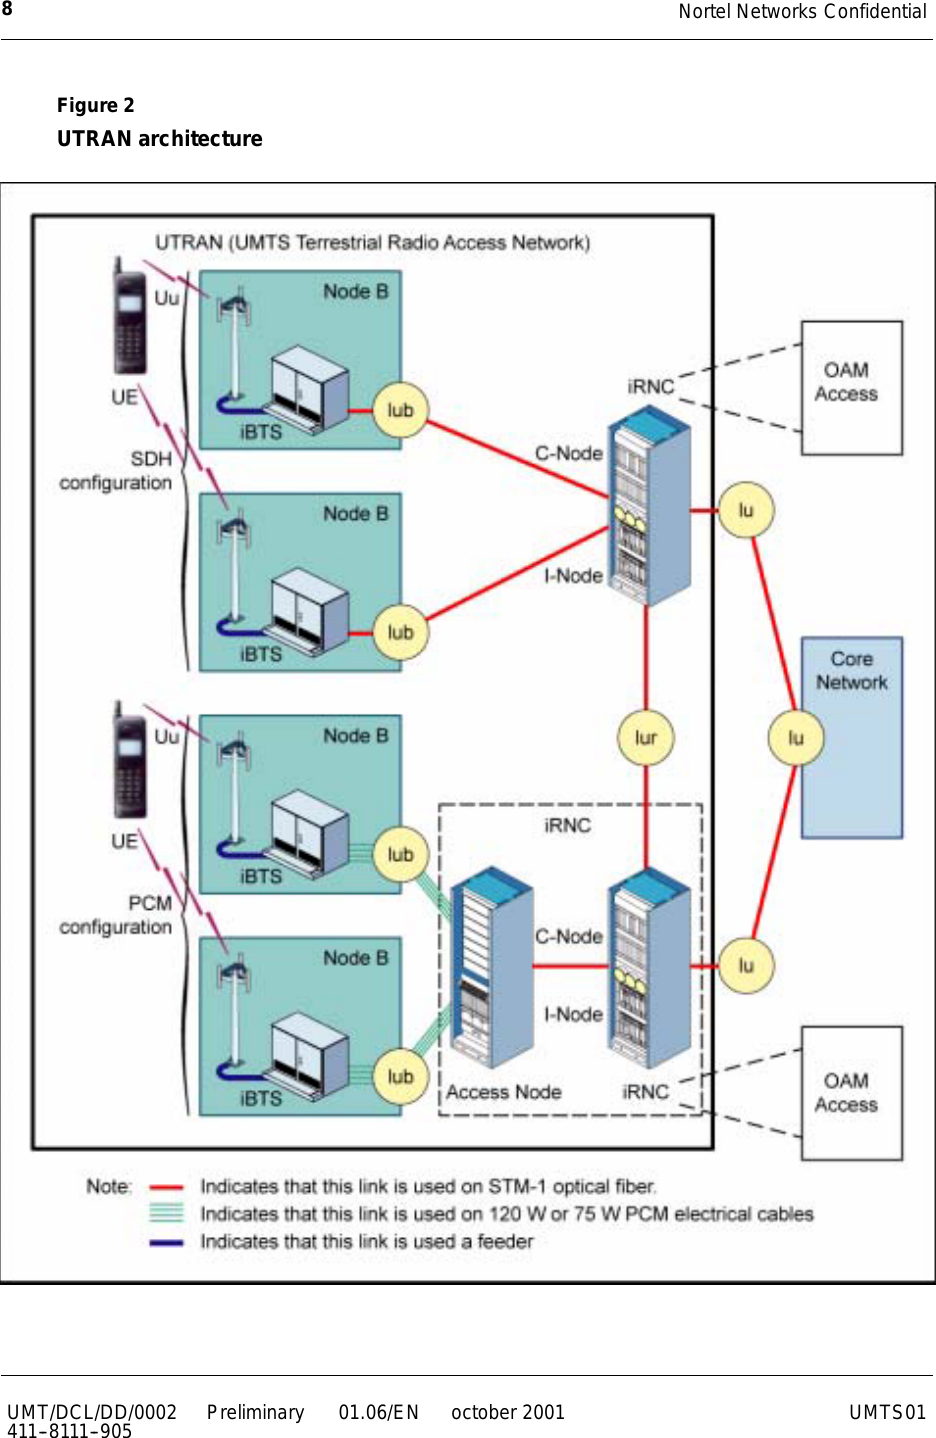 Nortel Networks Confidential8UMT/DCL/DD/0002411--8111--905 Preliminary 01.06/EN october 2001 UMTS01Figure 2UTRAN architecture